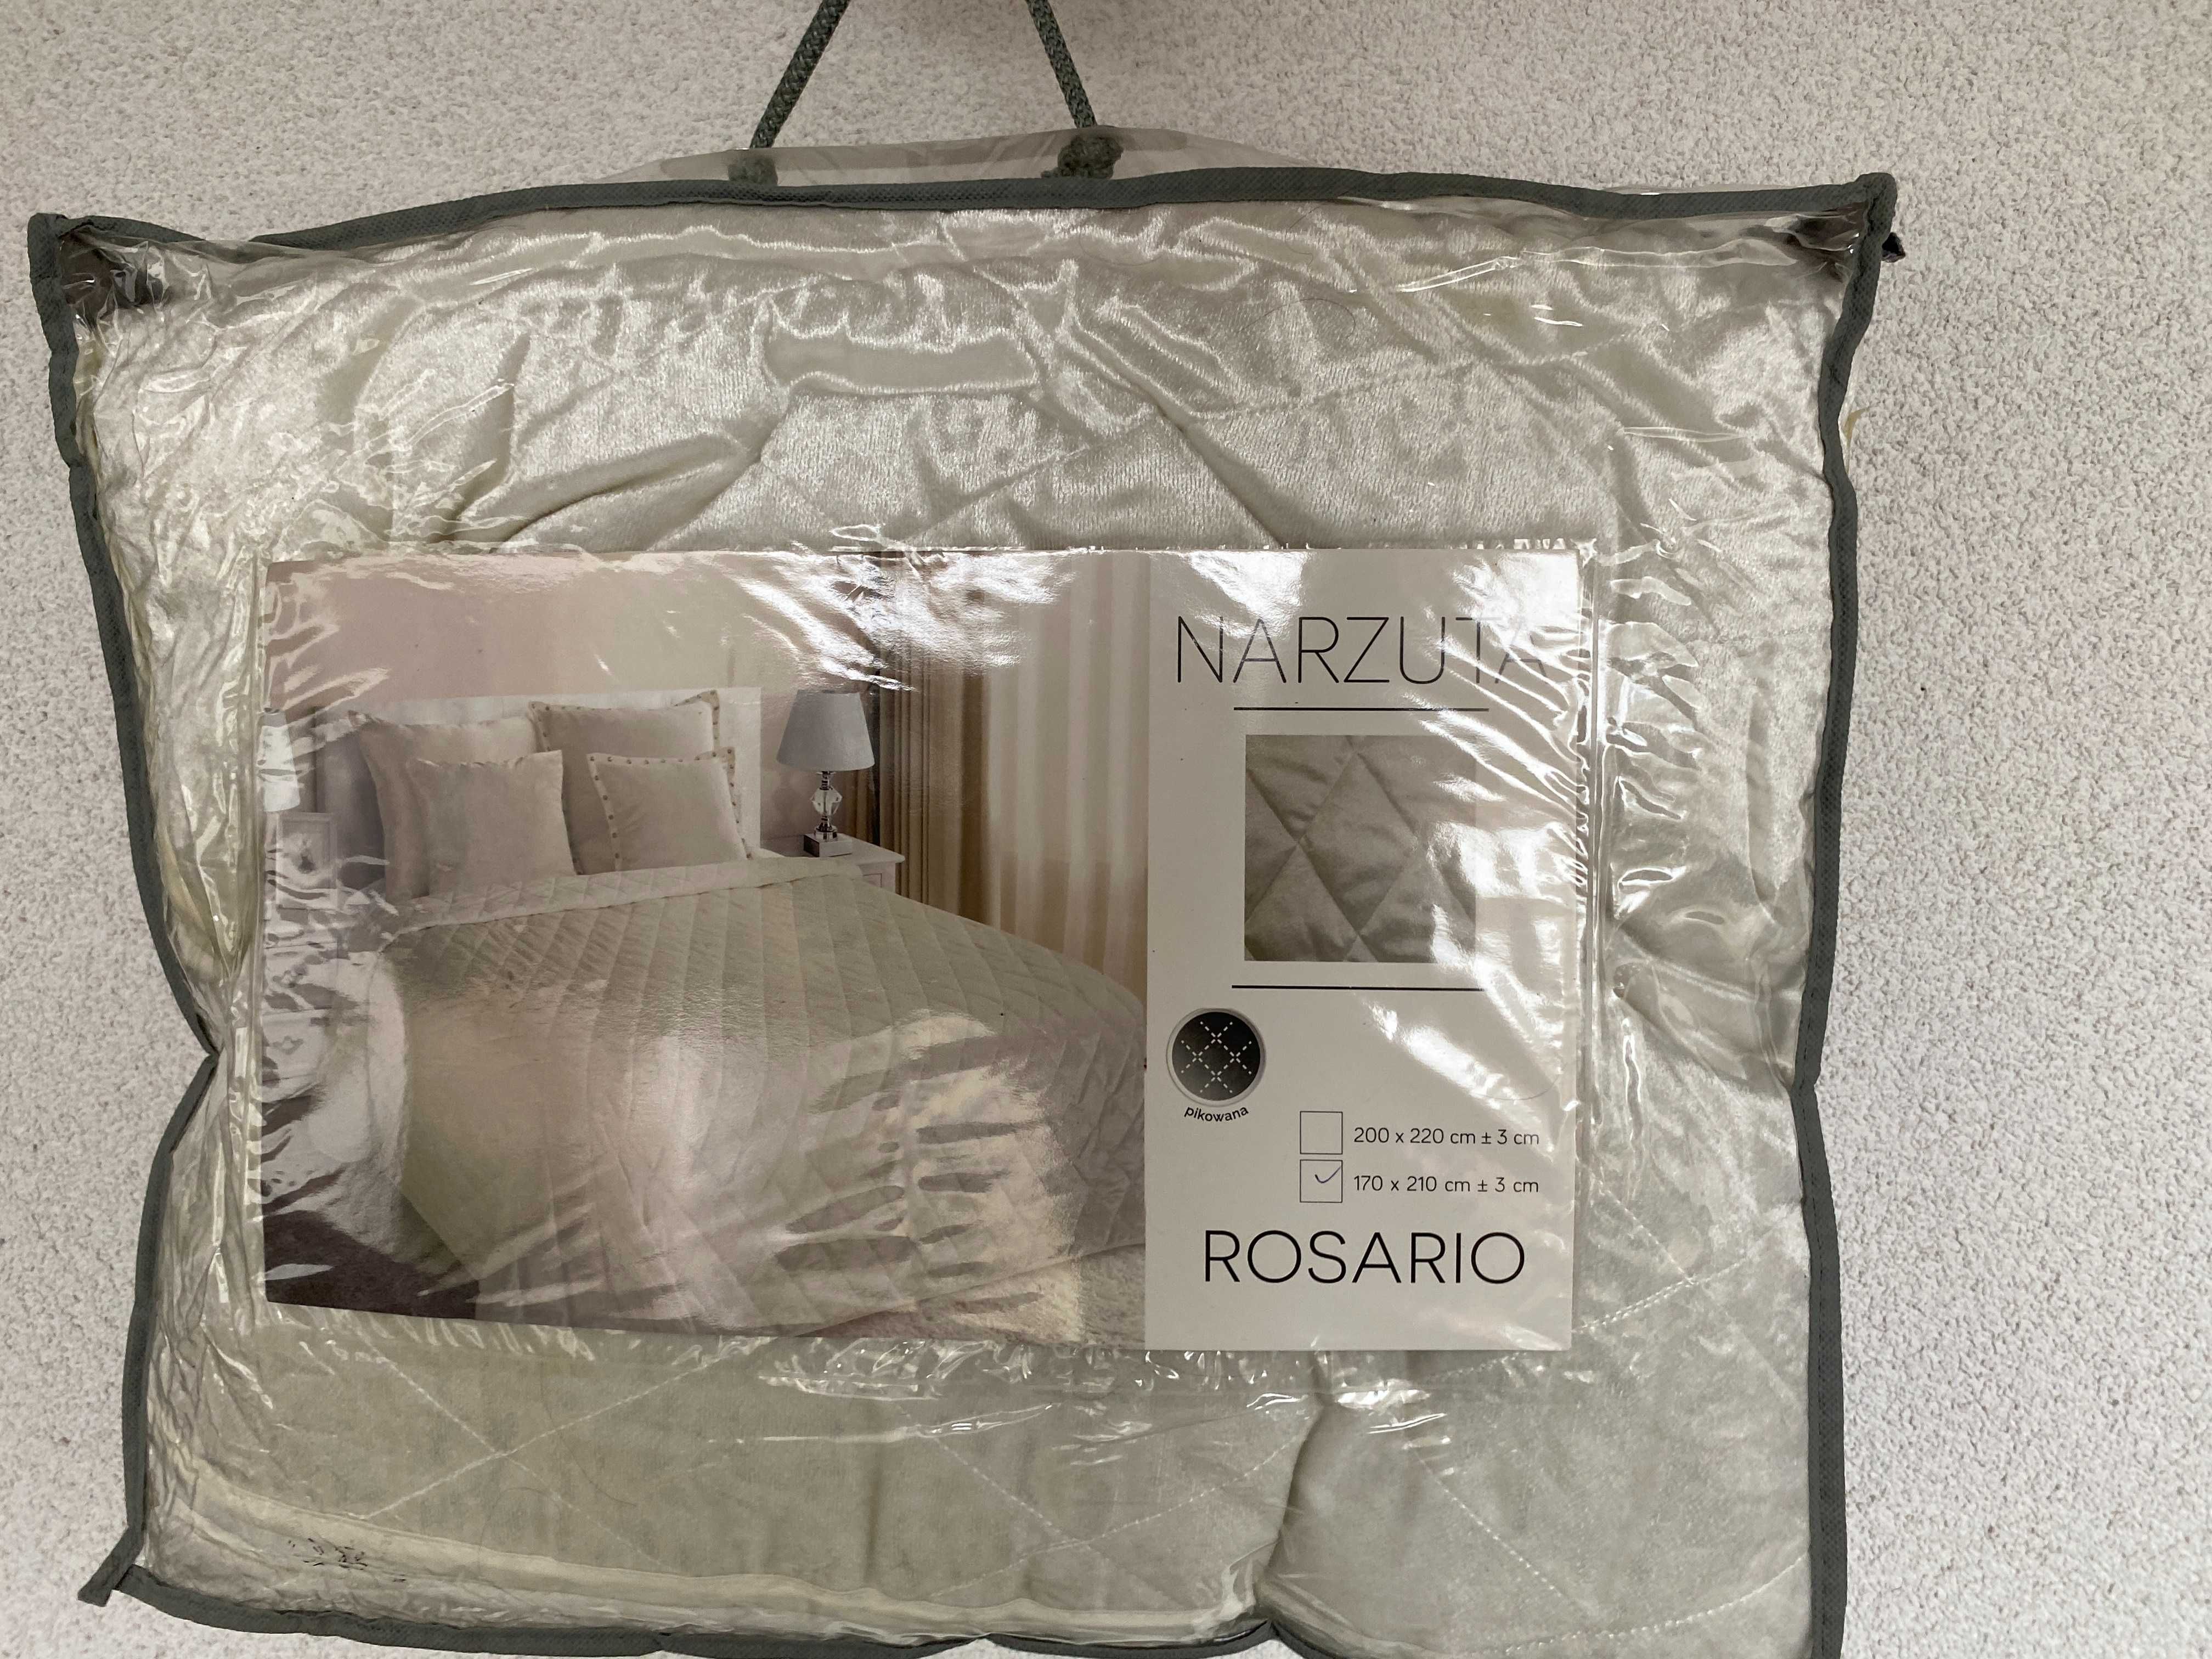 Cuvertura matlasata, alb sidefat, 'Rosario', nou, 170x210cm